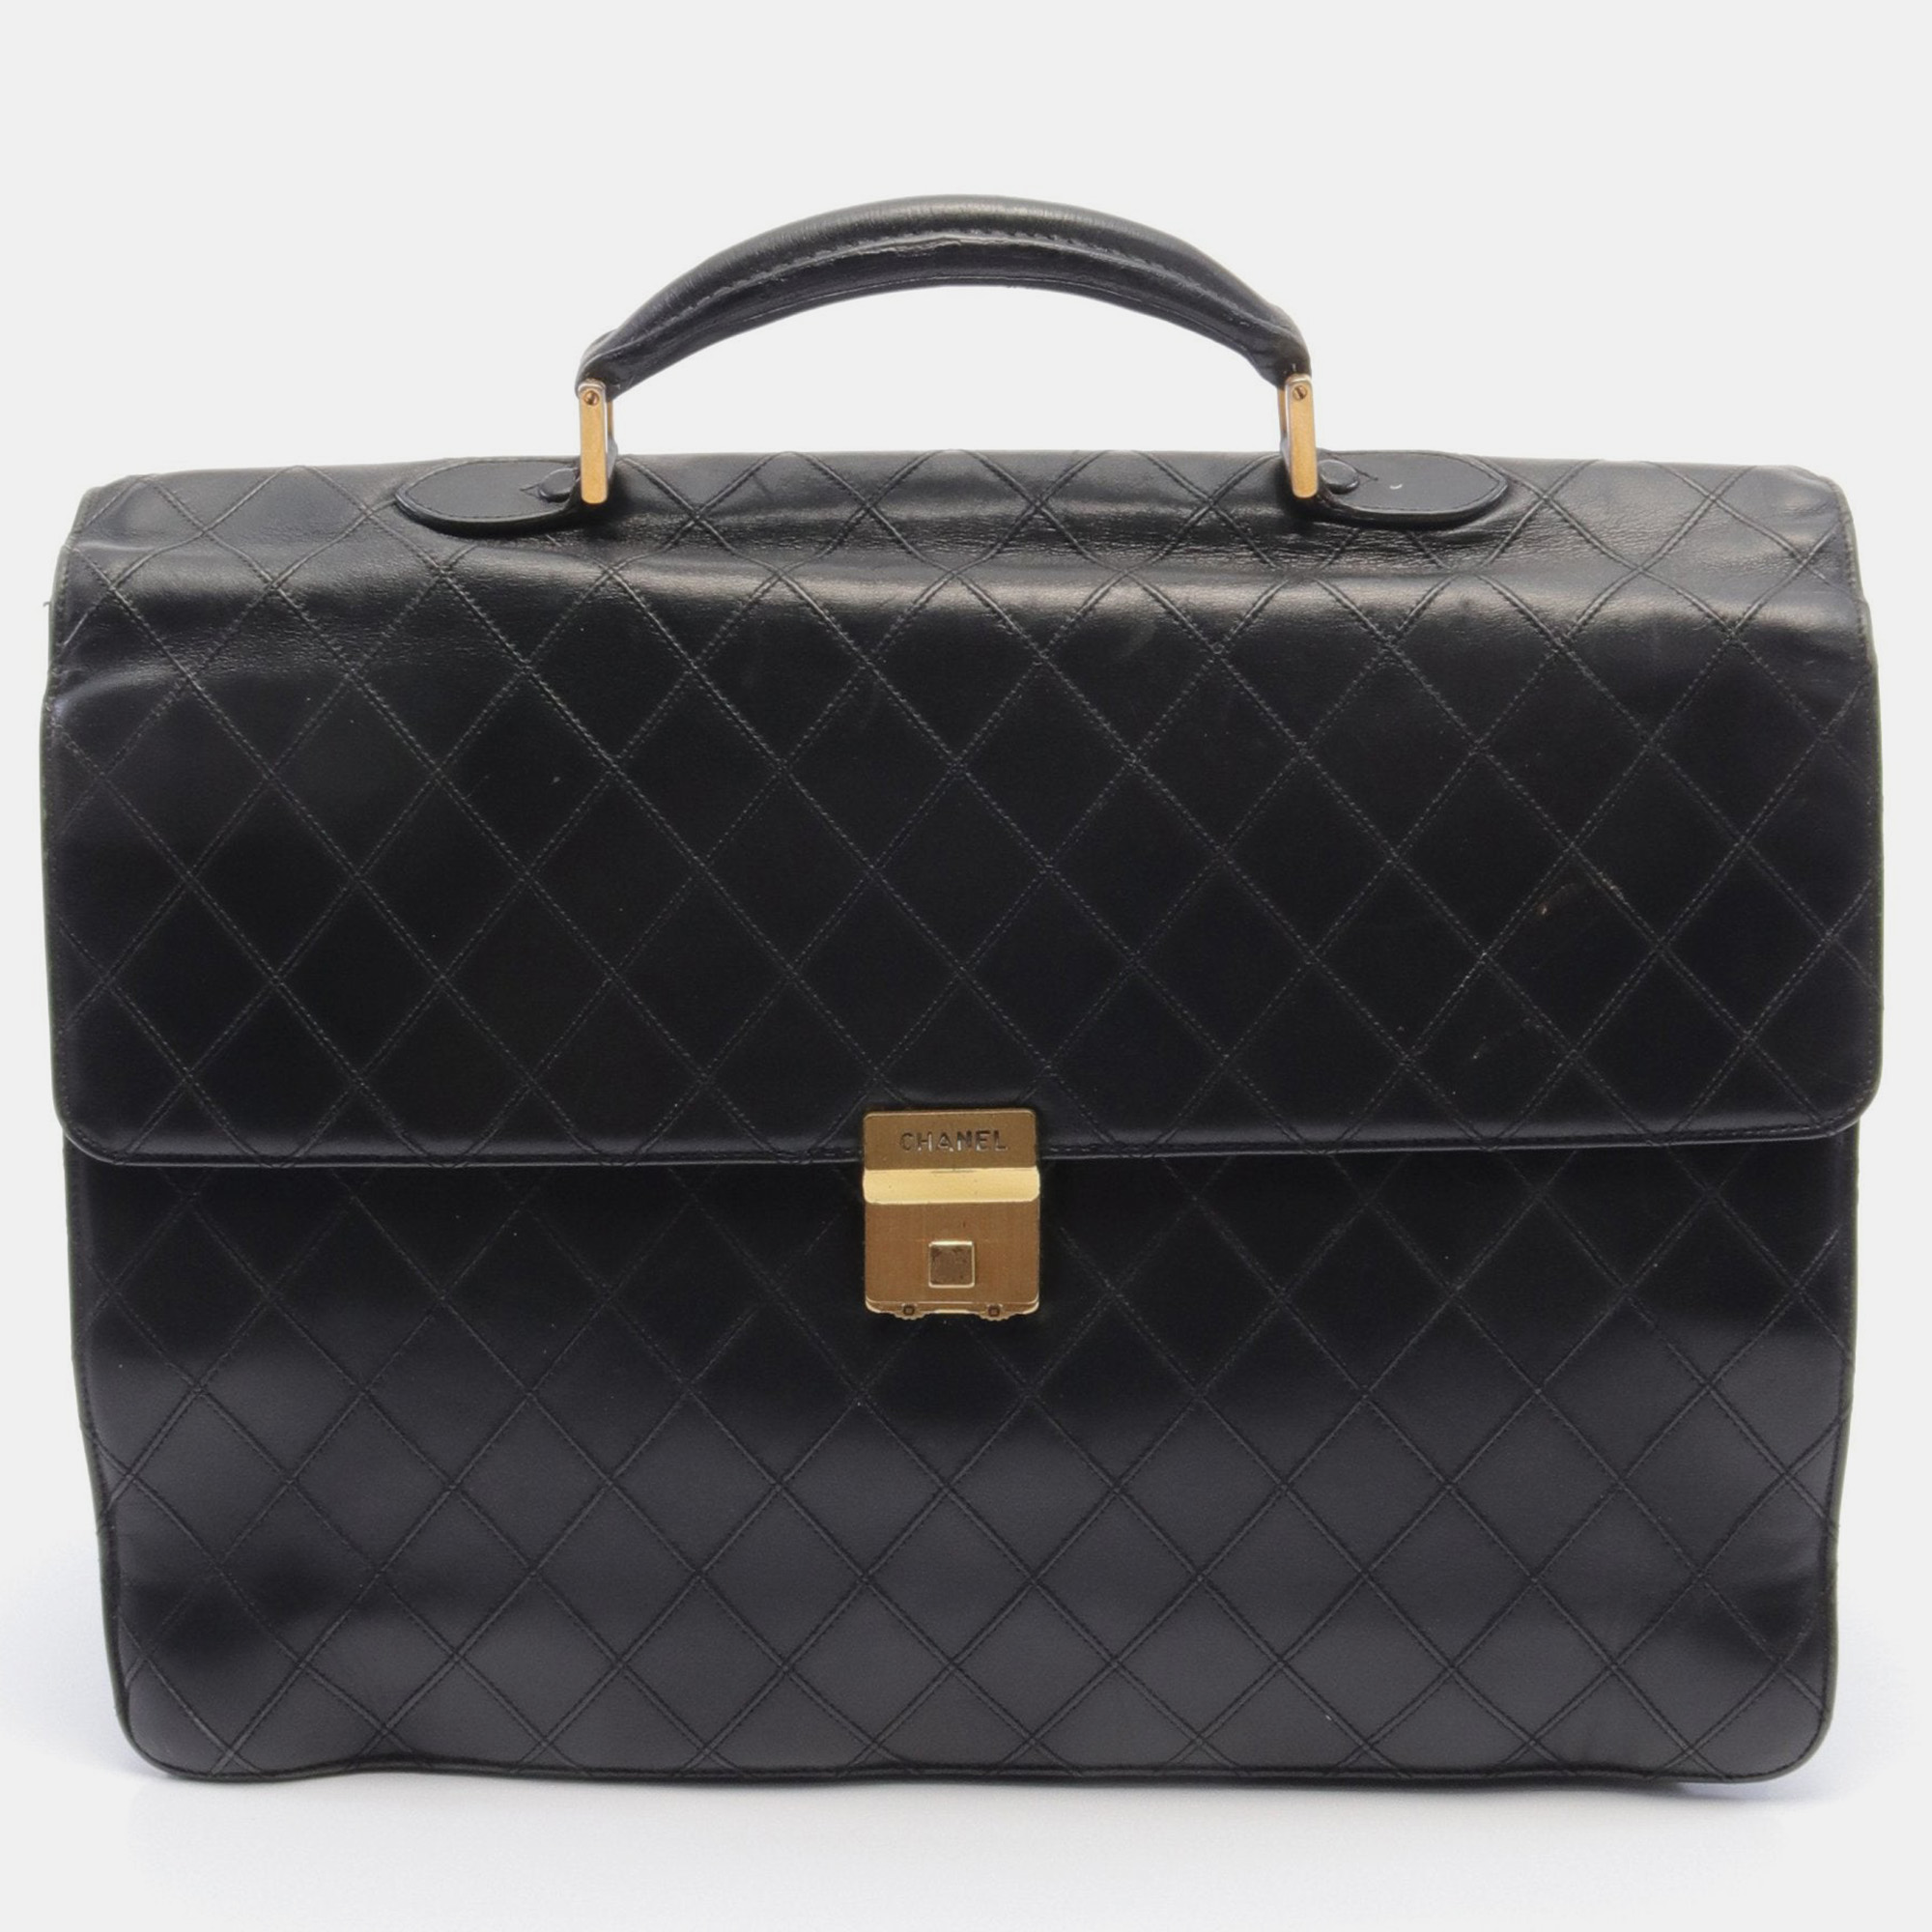 Pre-owned Chanel Bicolore Business Bag Lambskin Black Gold Hardware Vintage